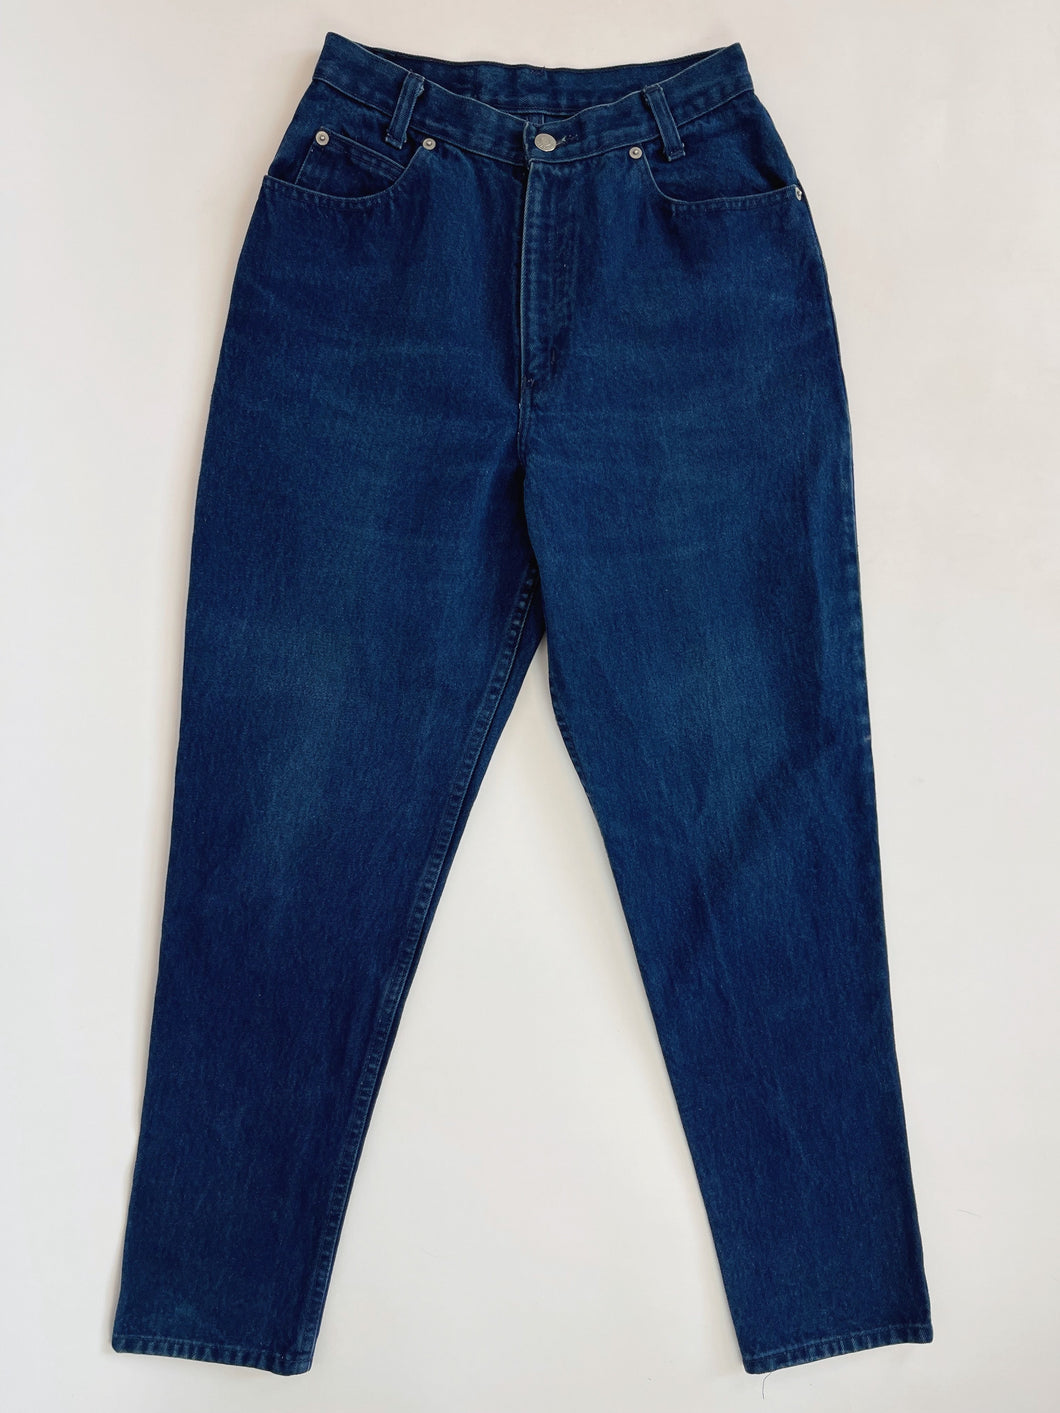 90s Dark Wash High Waisted Jeans (W27